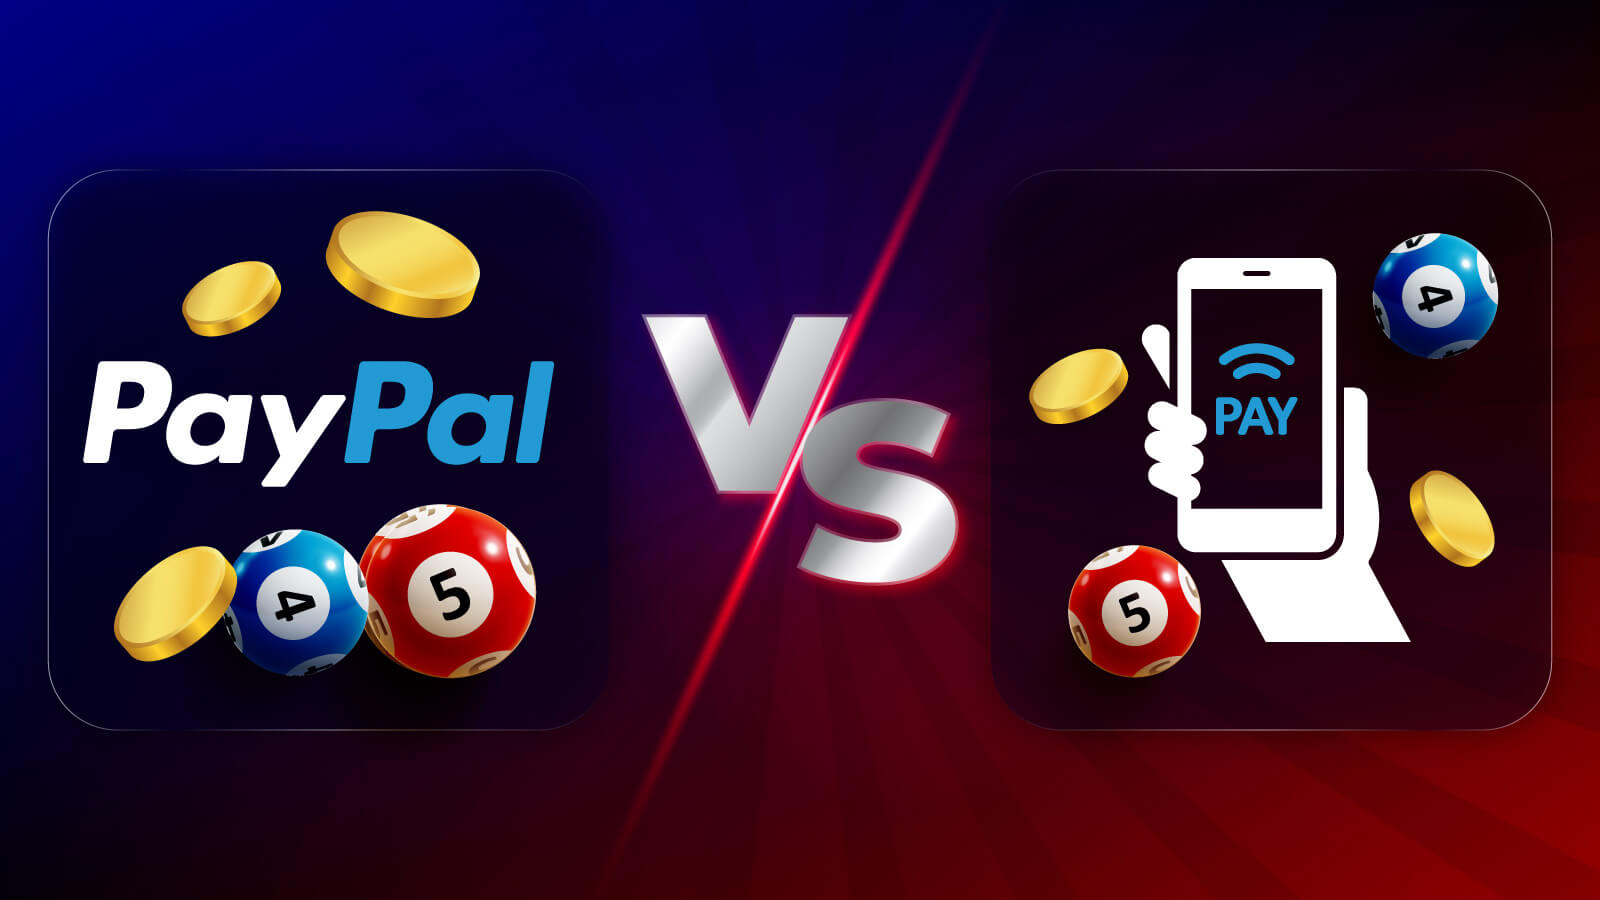 PayPal Bingo Platforms vs. Pay by Phone Bingo Platforms